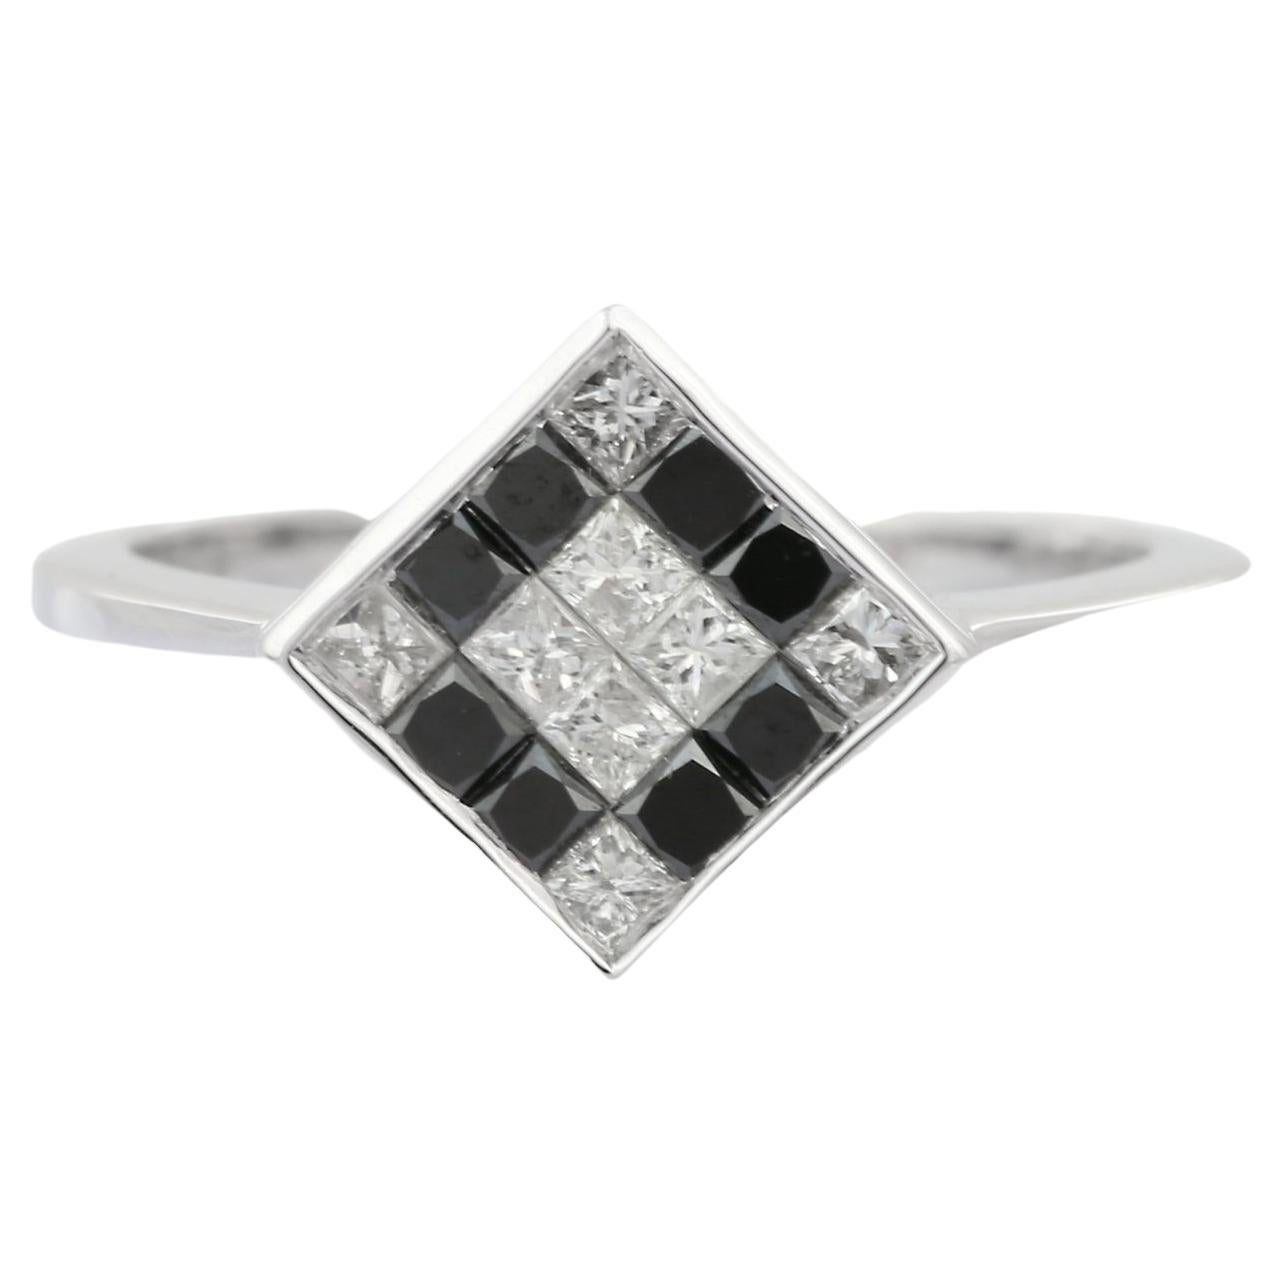 For Sale:  Art Deco Style Black White Diamond Square Ring in 18 Karat White Gold